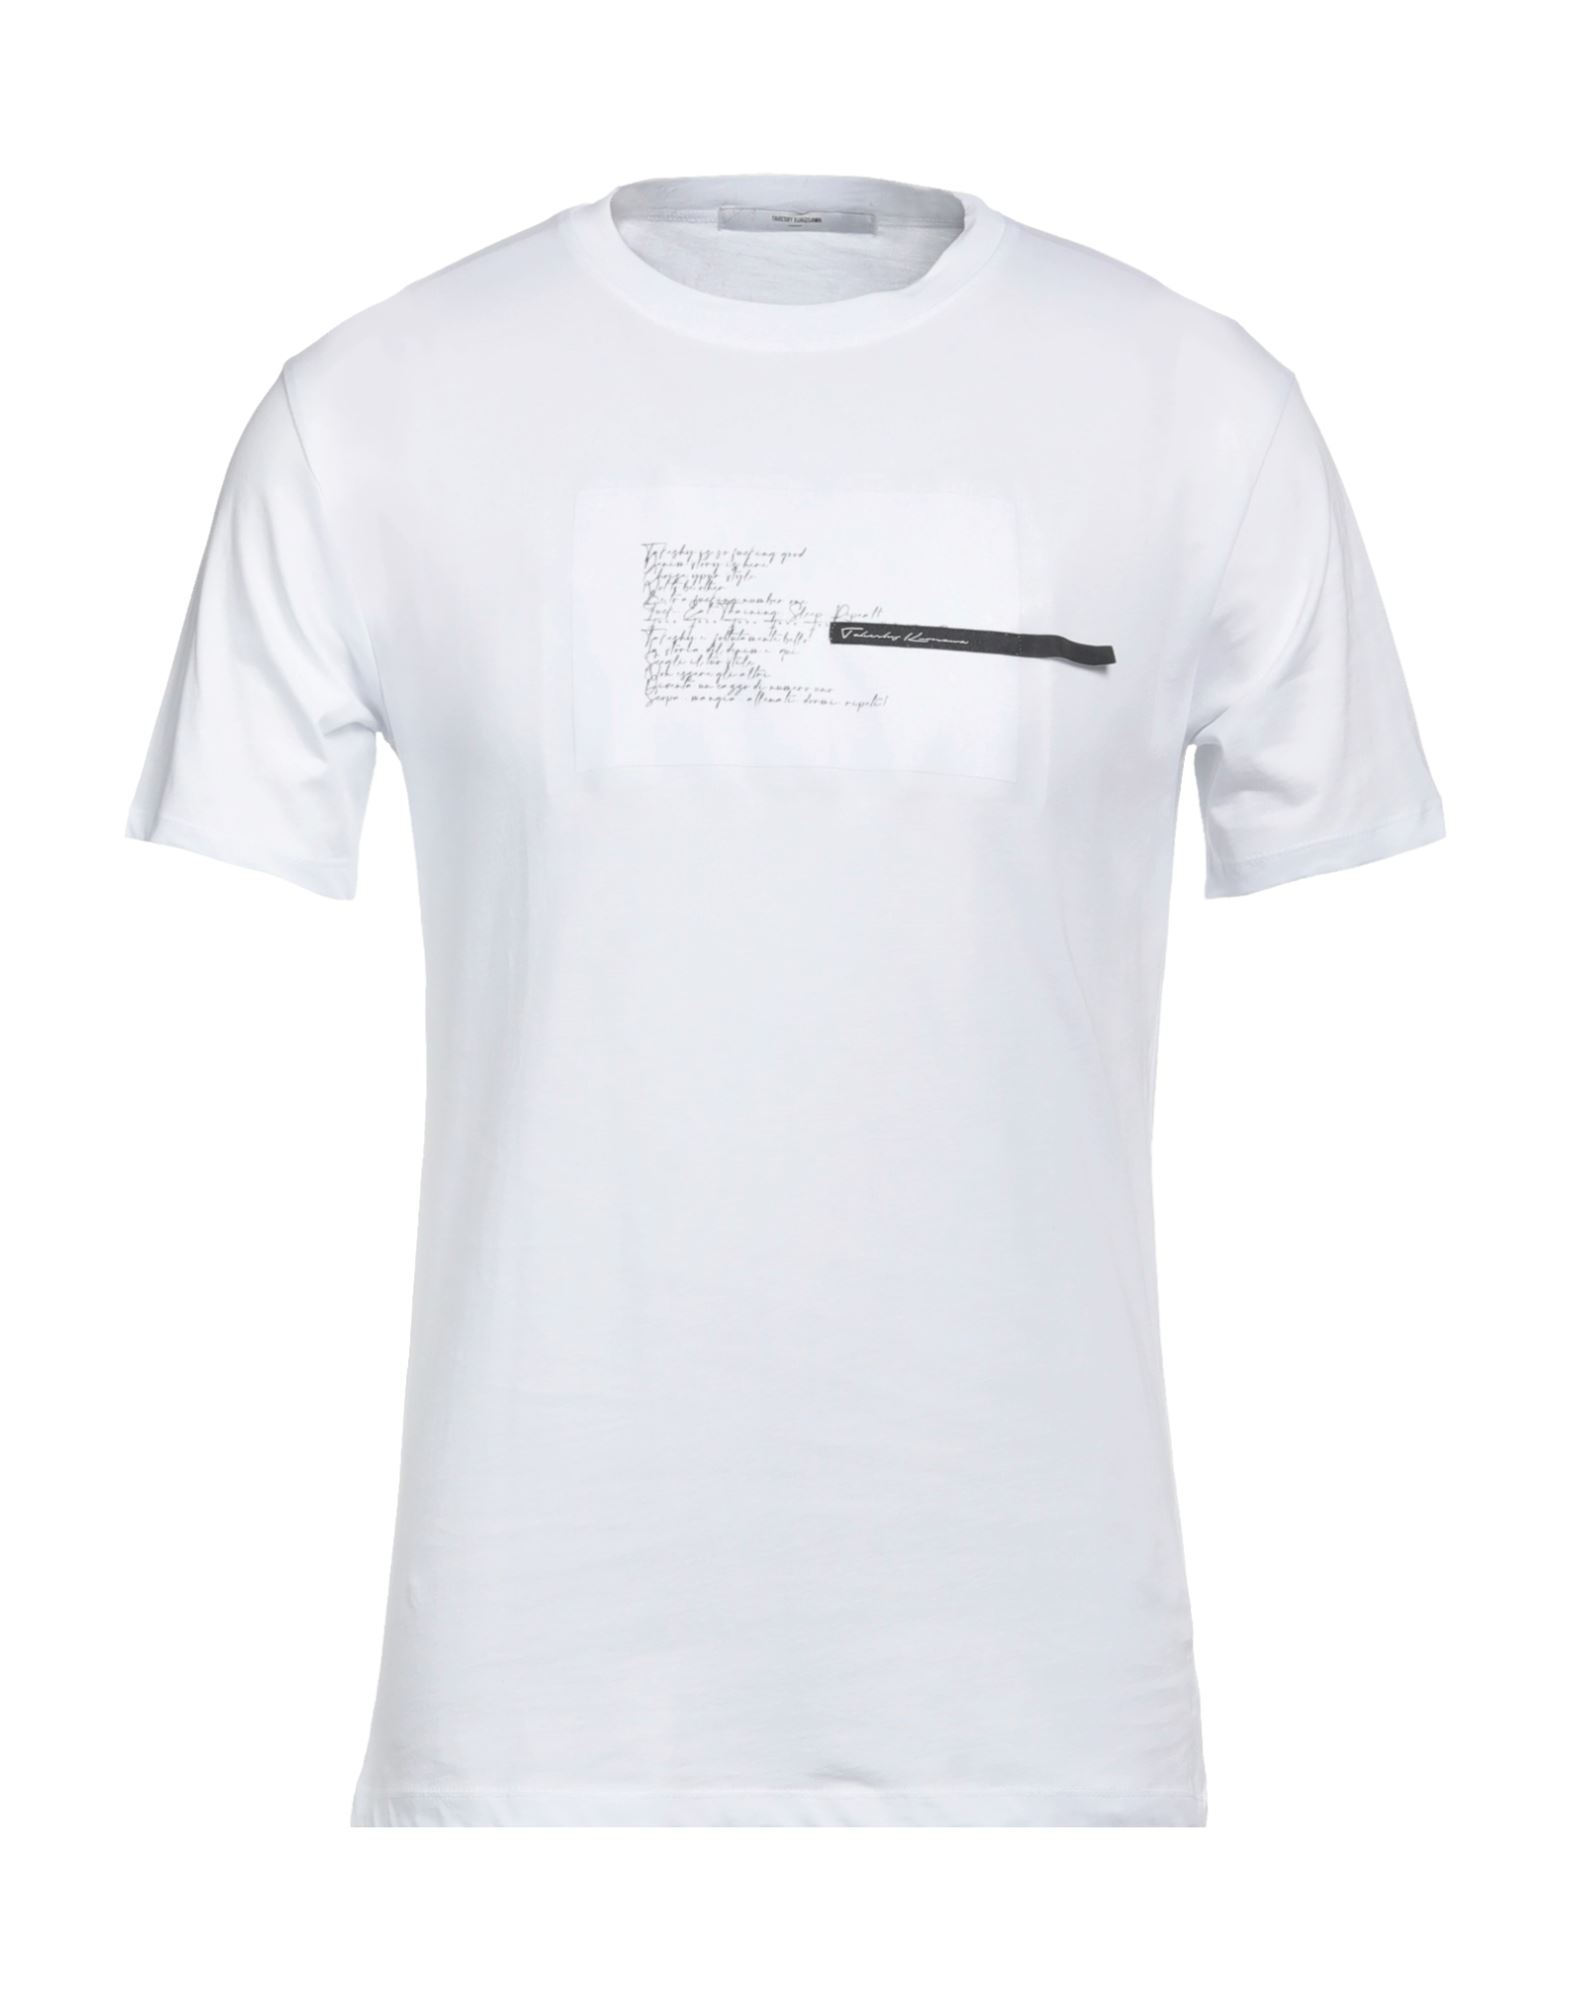 TAKESHY KUROSAWA T-shirts Herren Weiß von TAKESHY KUROSAWA